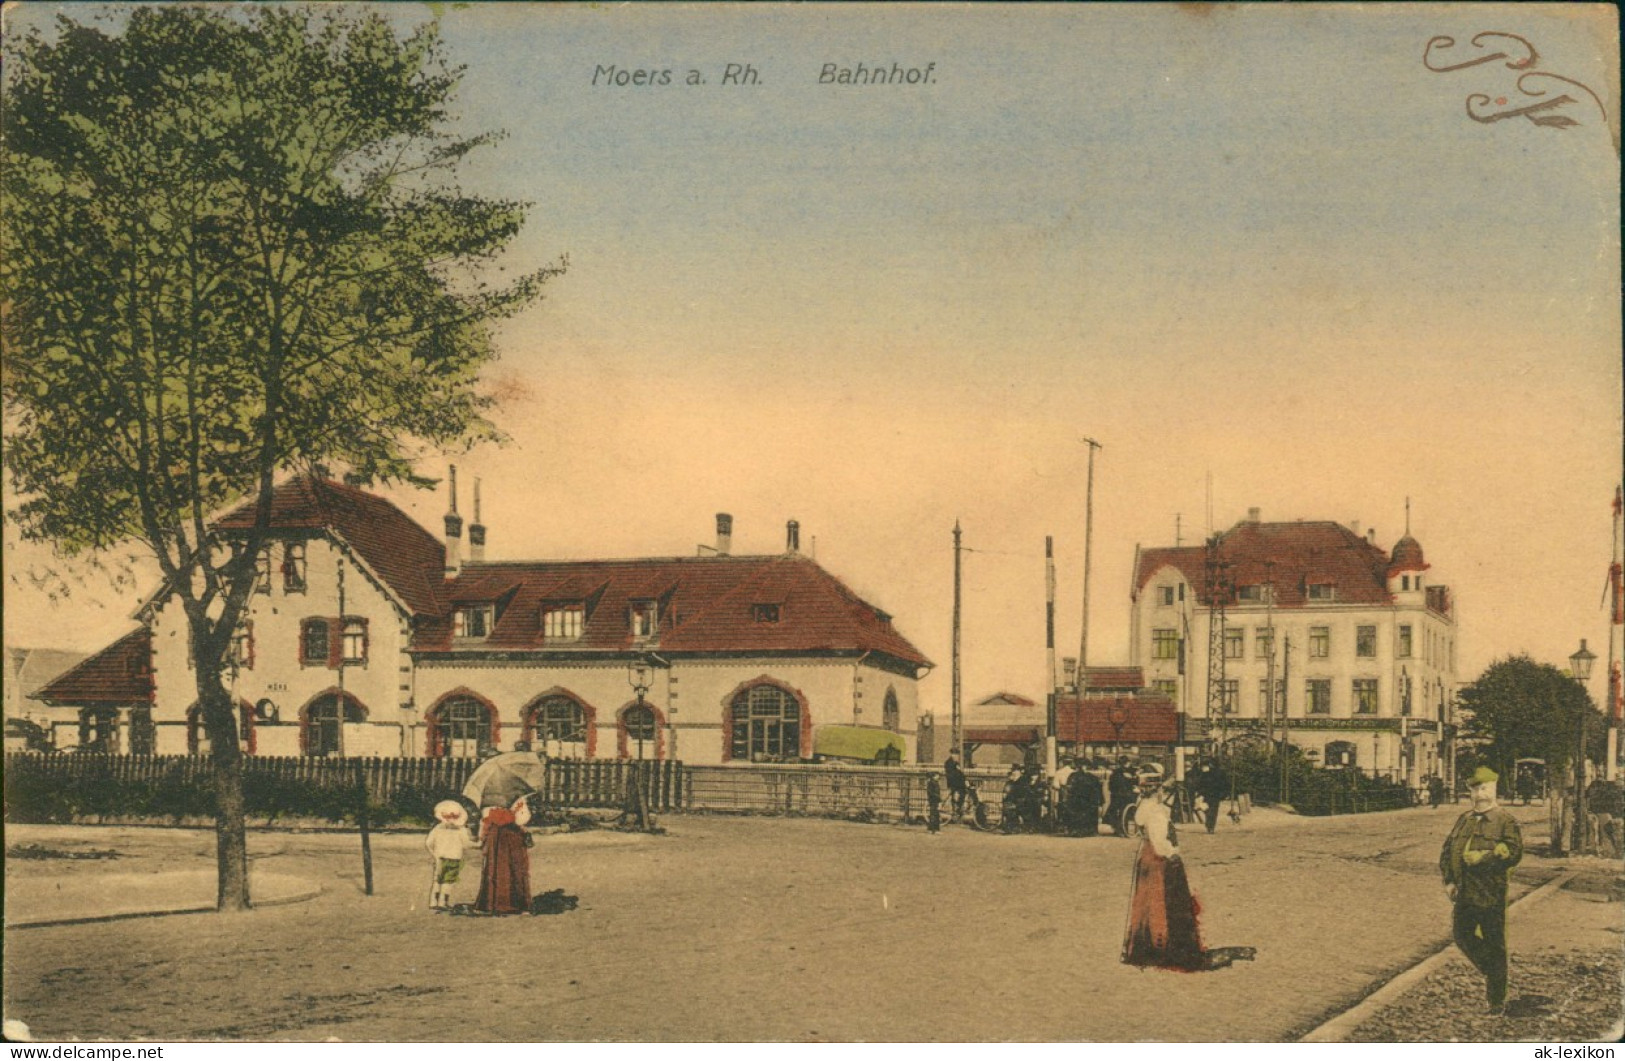 Ansichtskarte Moers Bahnhof 1909 - Mörs